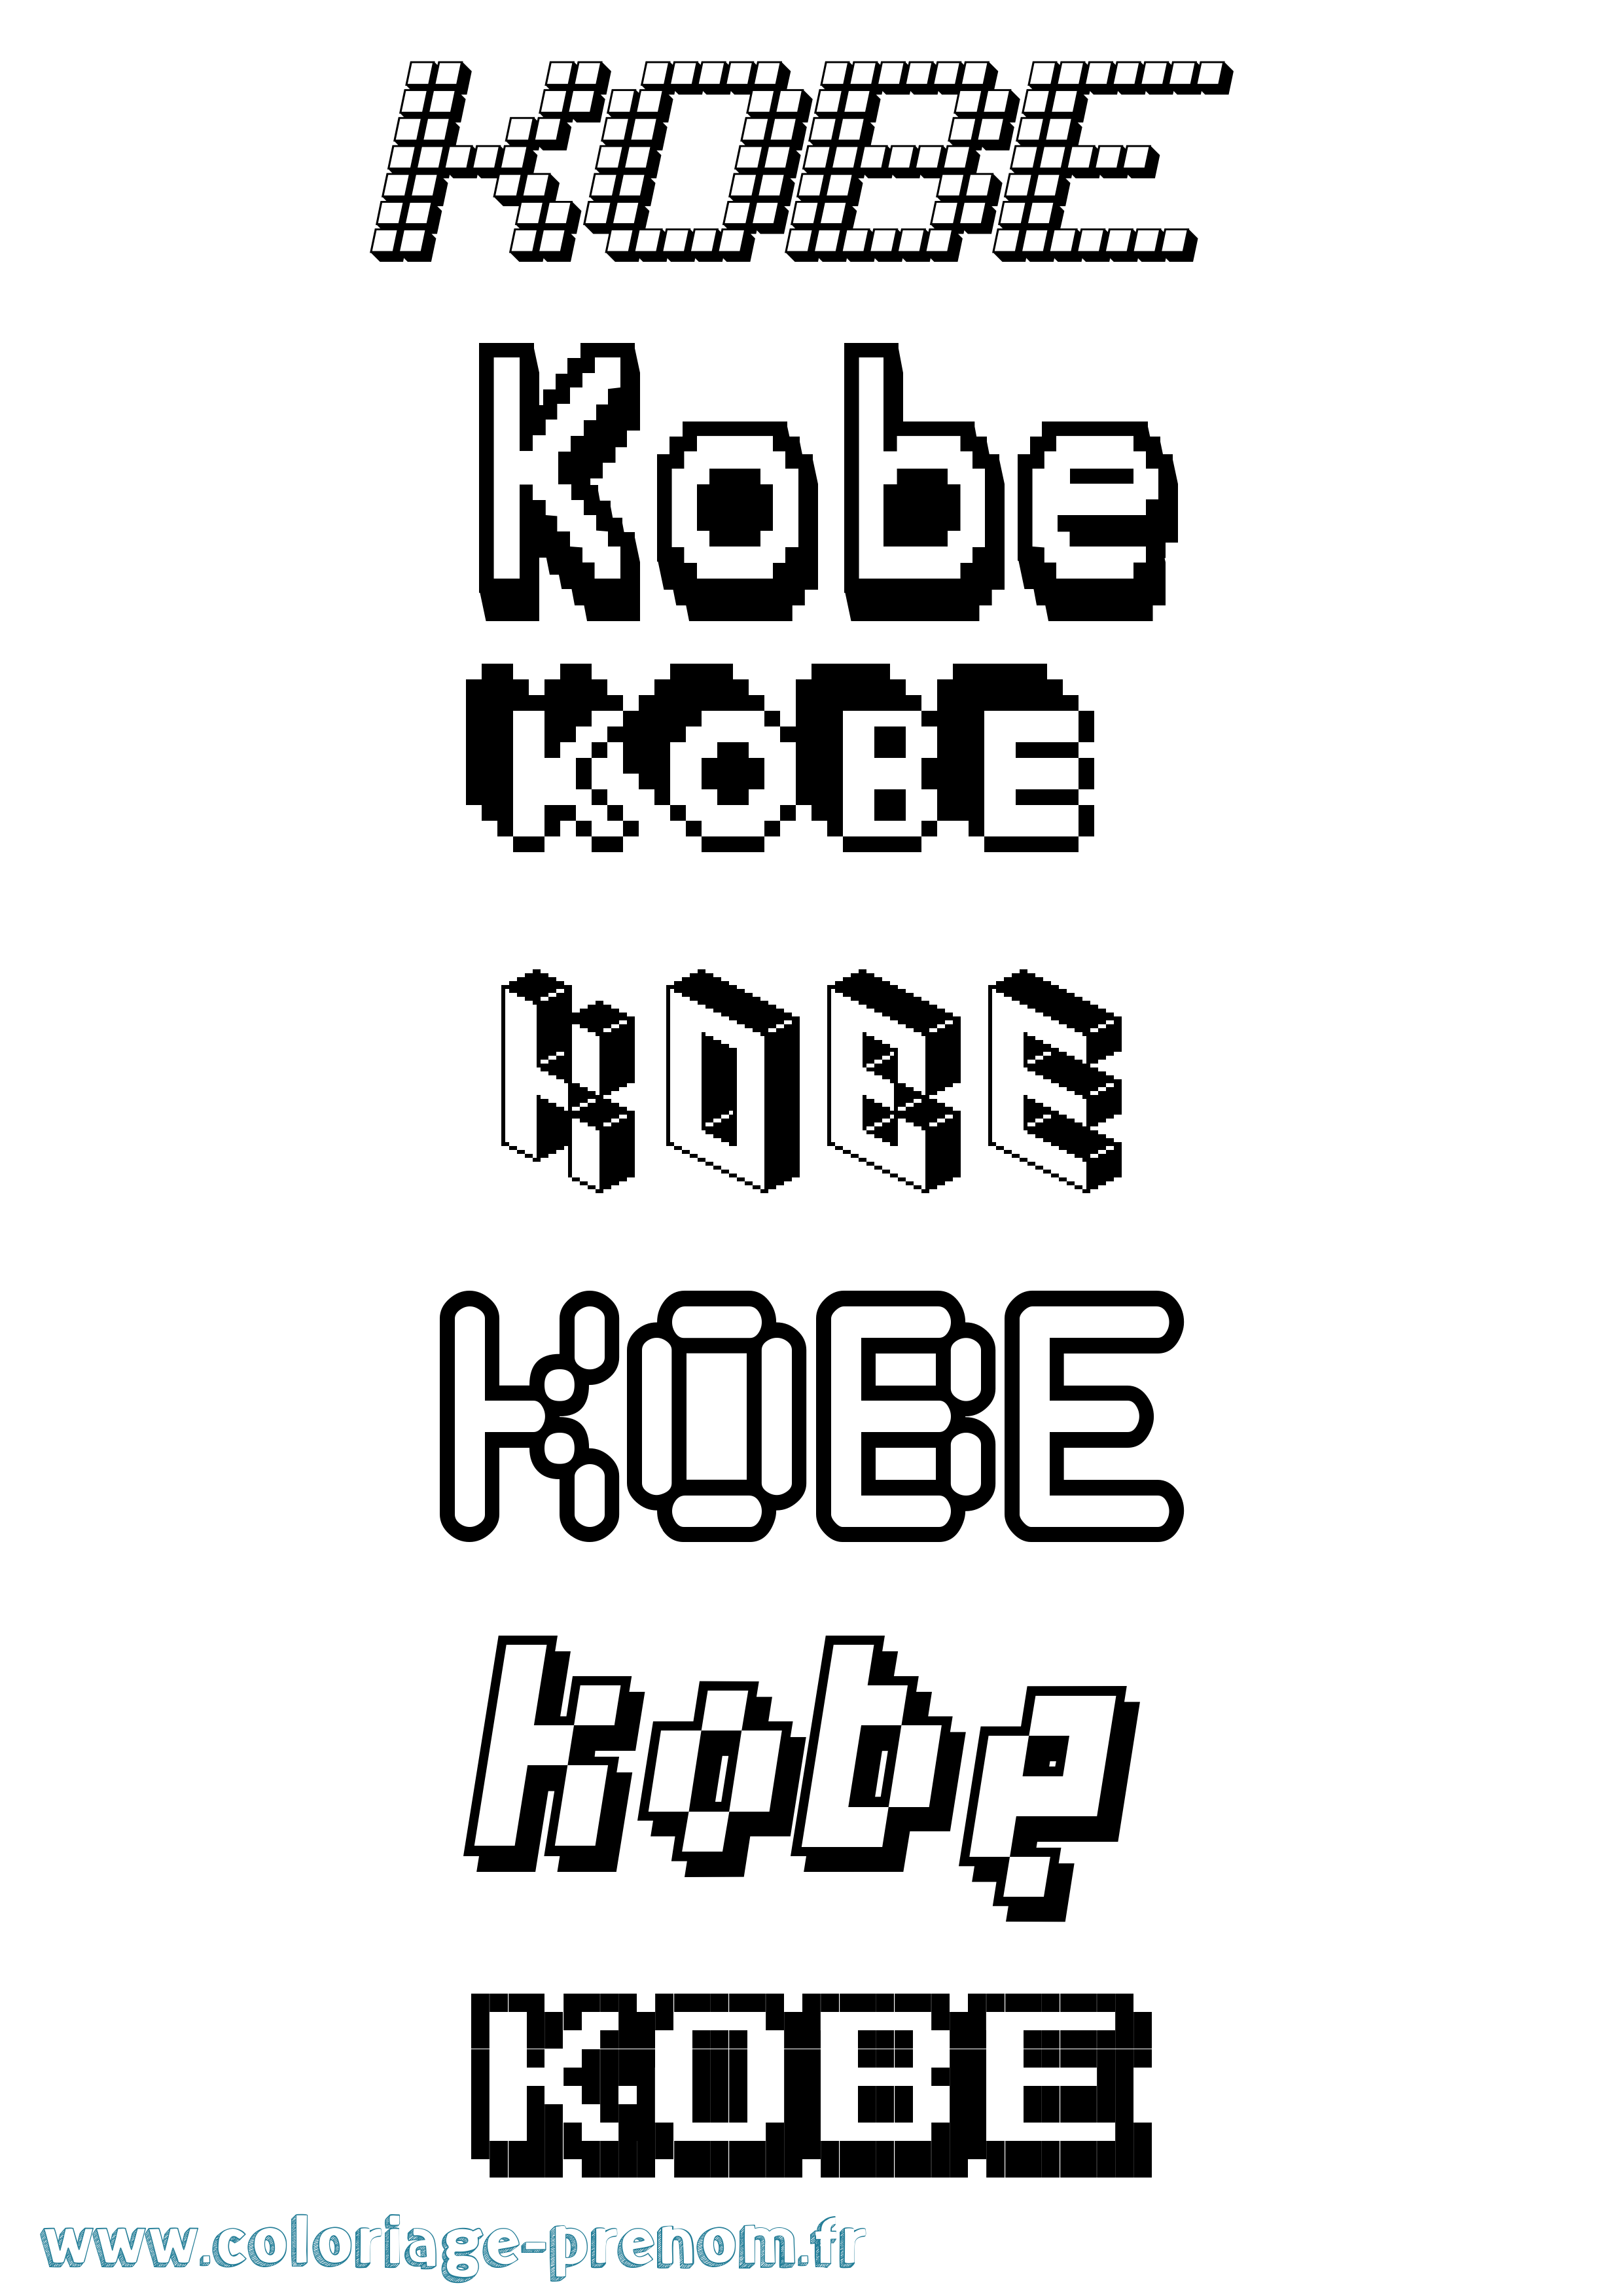 Coloriage prénom Kobe Pixel